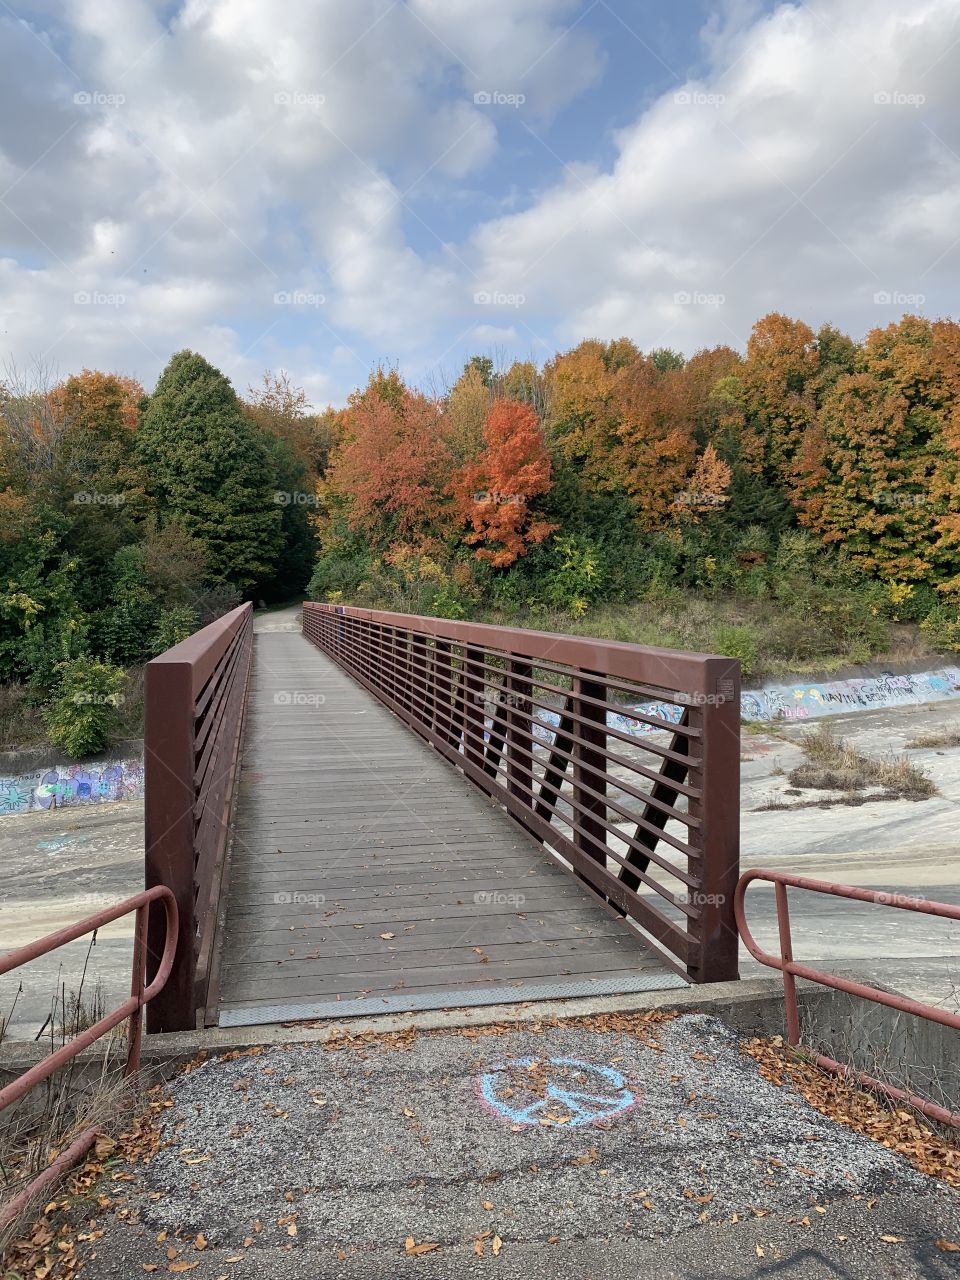 Lake bridge and fall colorful trees